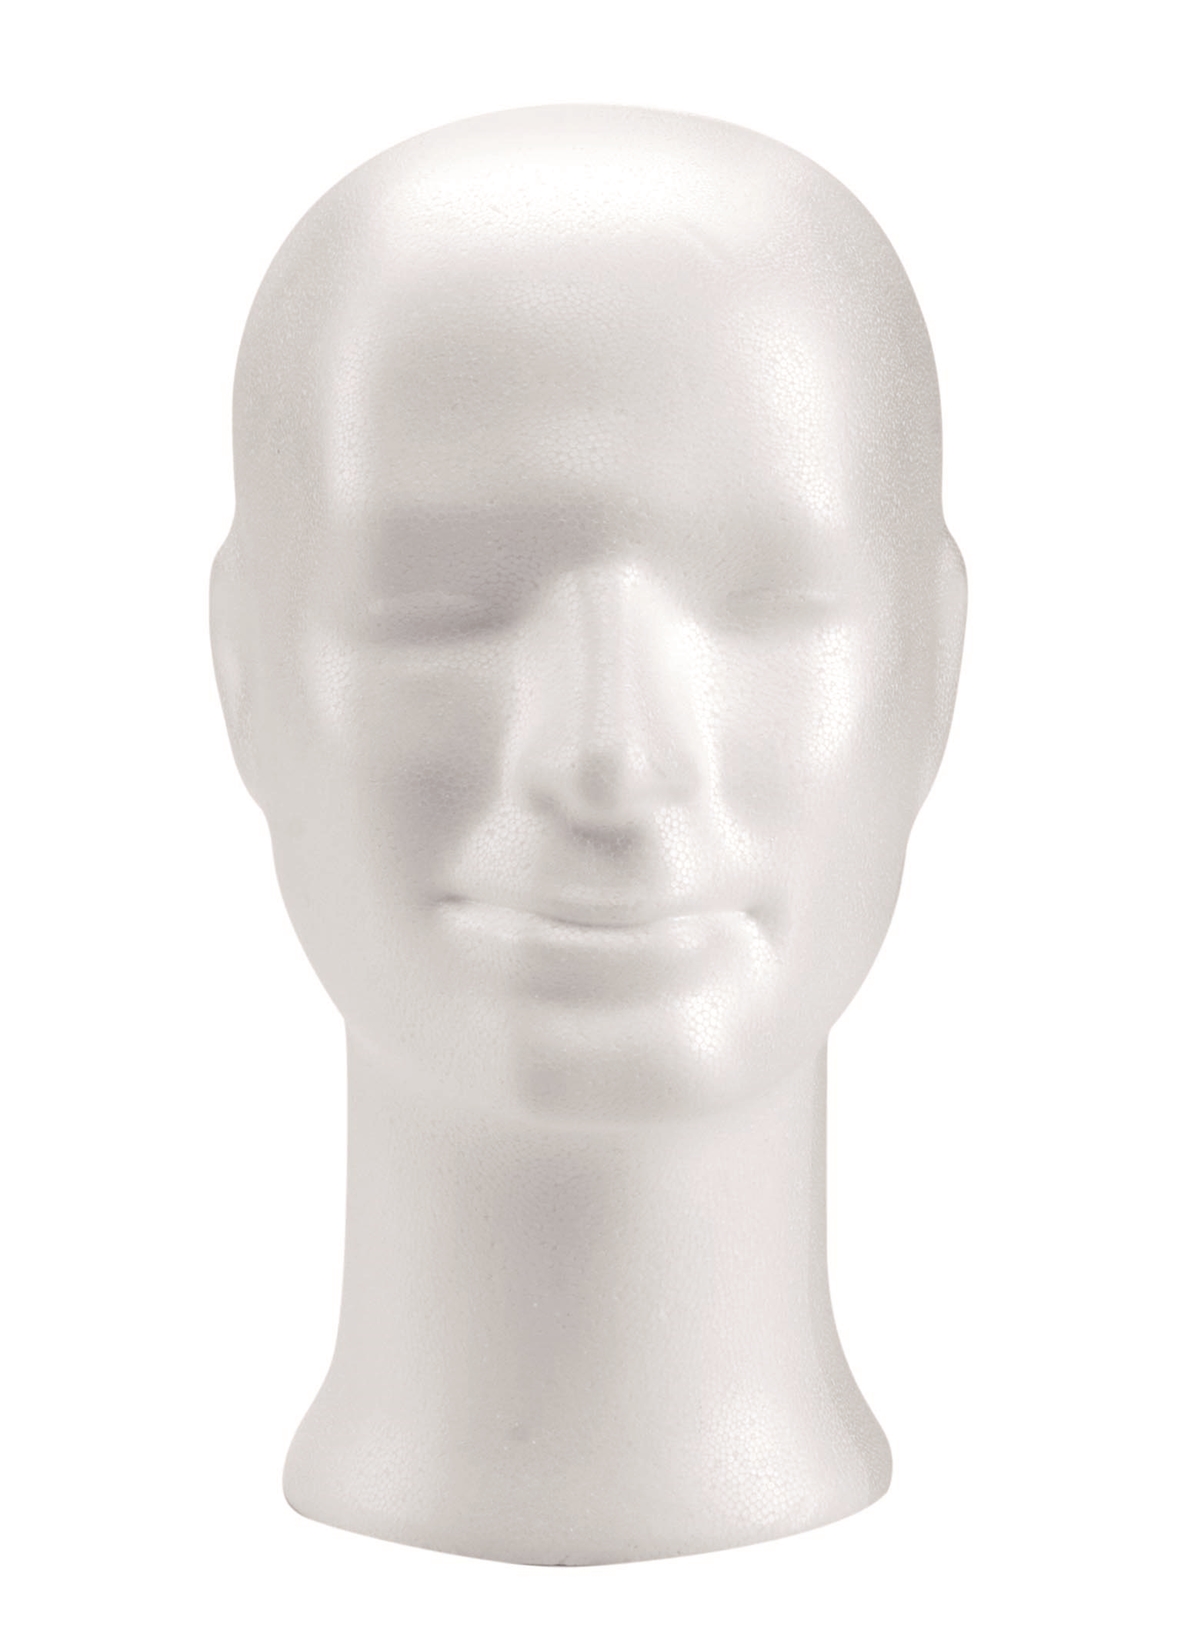 Styroporkopf "Mann", ca. 30 x 15 cm, 56,5 cm Kopfumfang